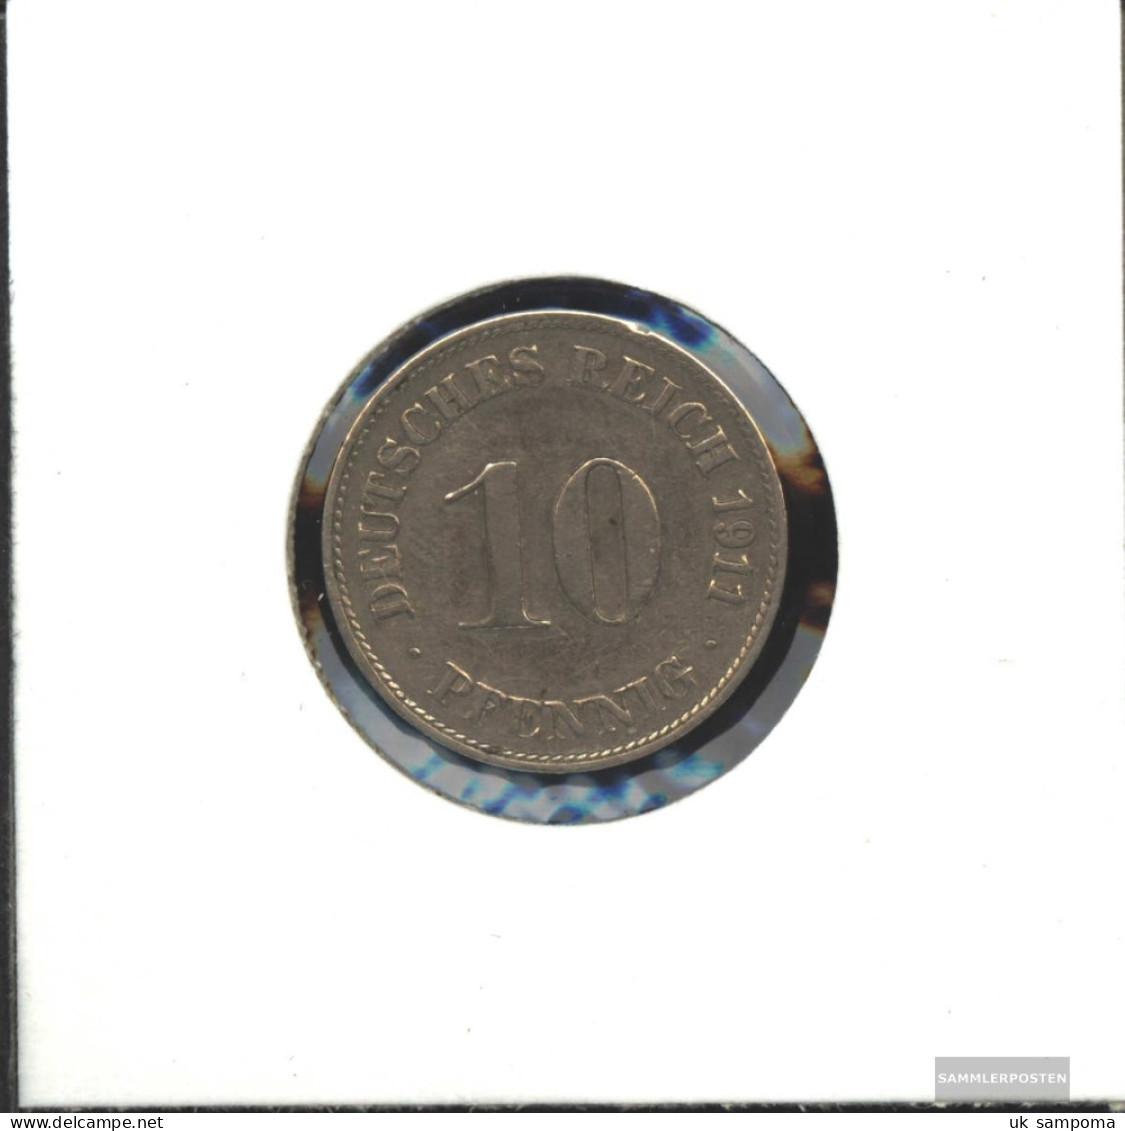 German Empire Jägernr: 13 1911 E Extremely Fine Copper-Nickel Extremely Fine 1911 10 Pfennig Large Imperial Eagle - 10 Pfennig